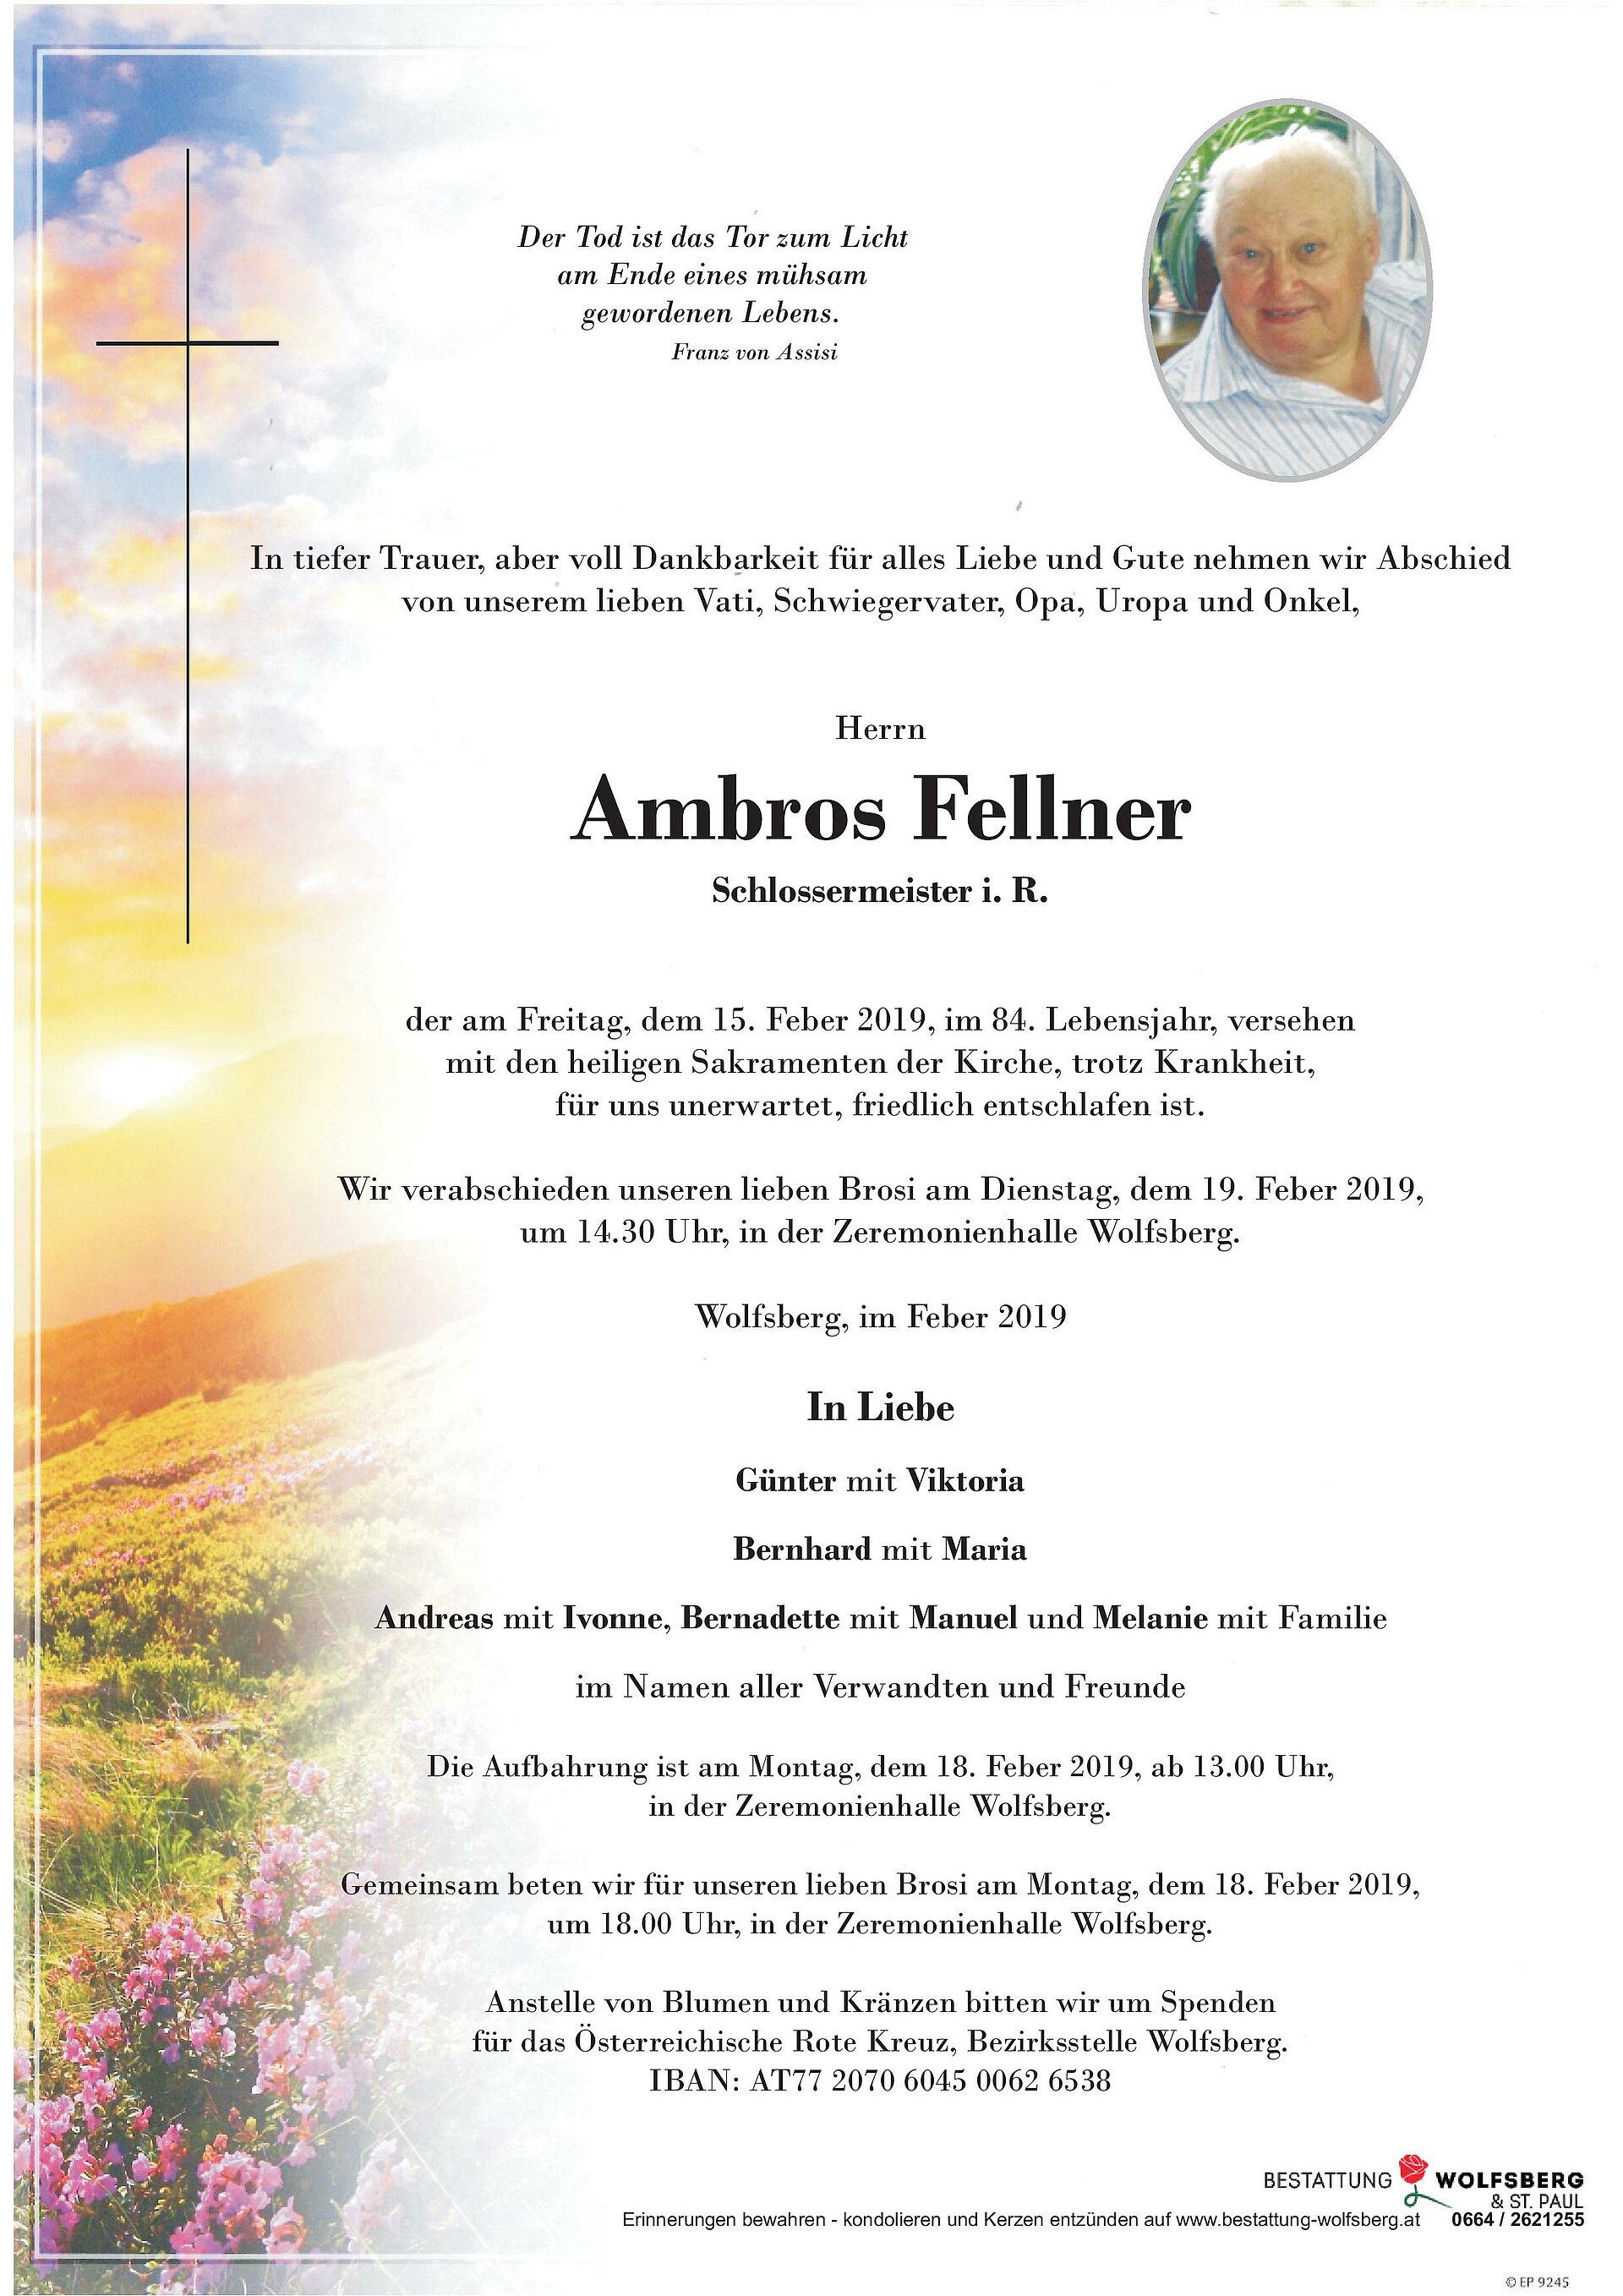 Ambros-Fellner-9245-page-001.jpg